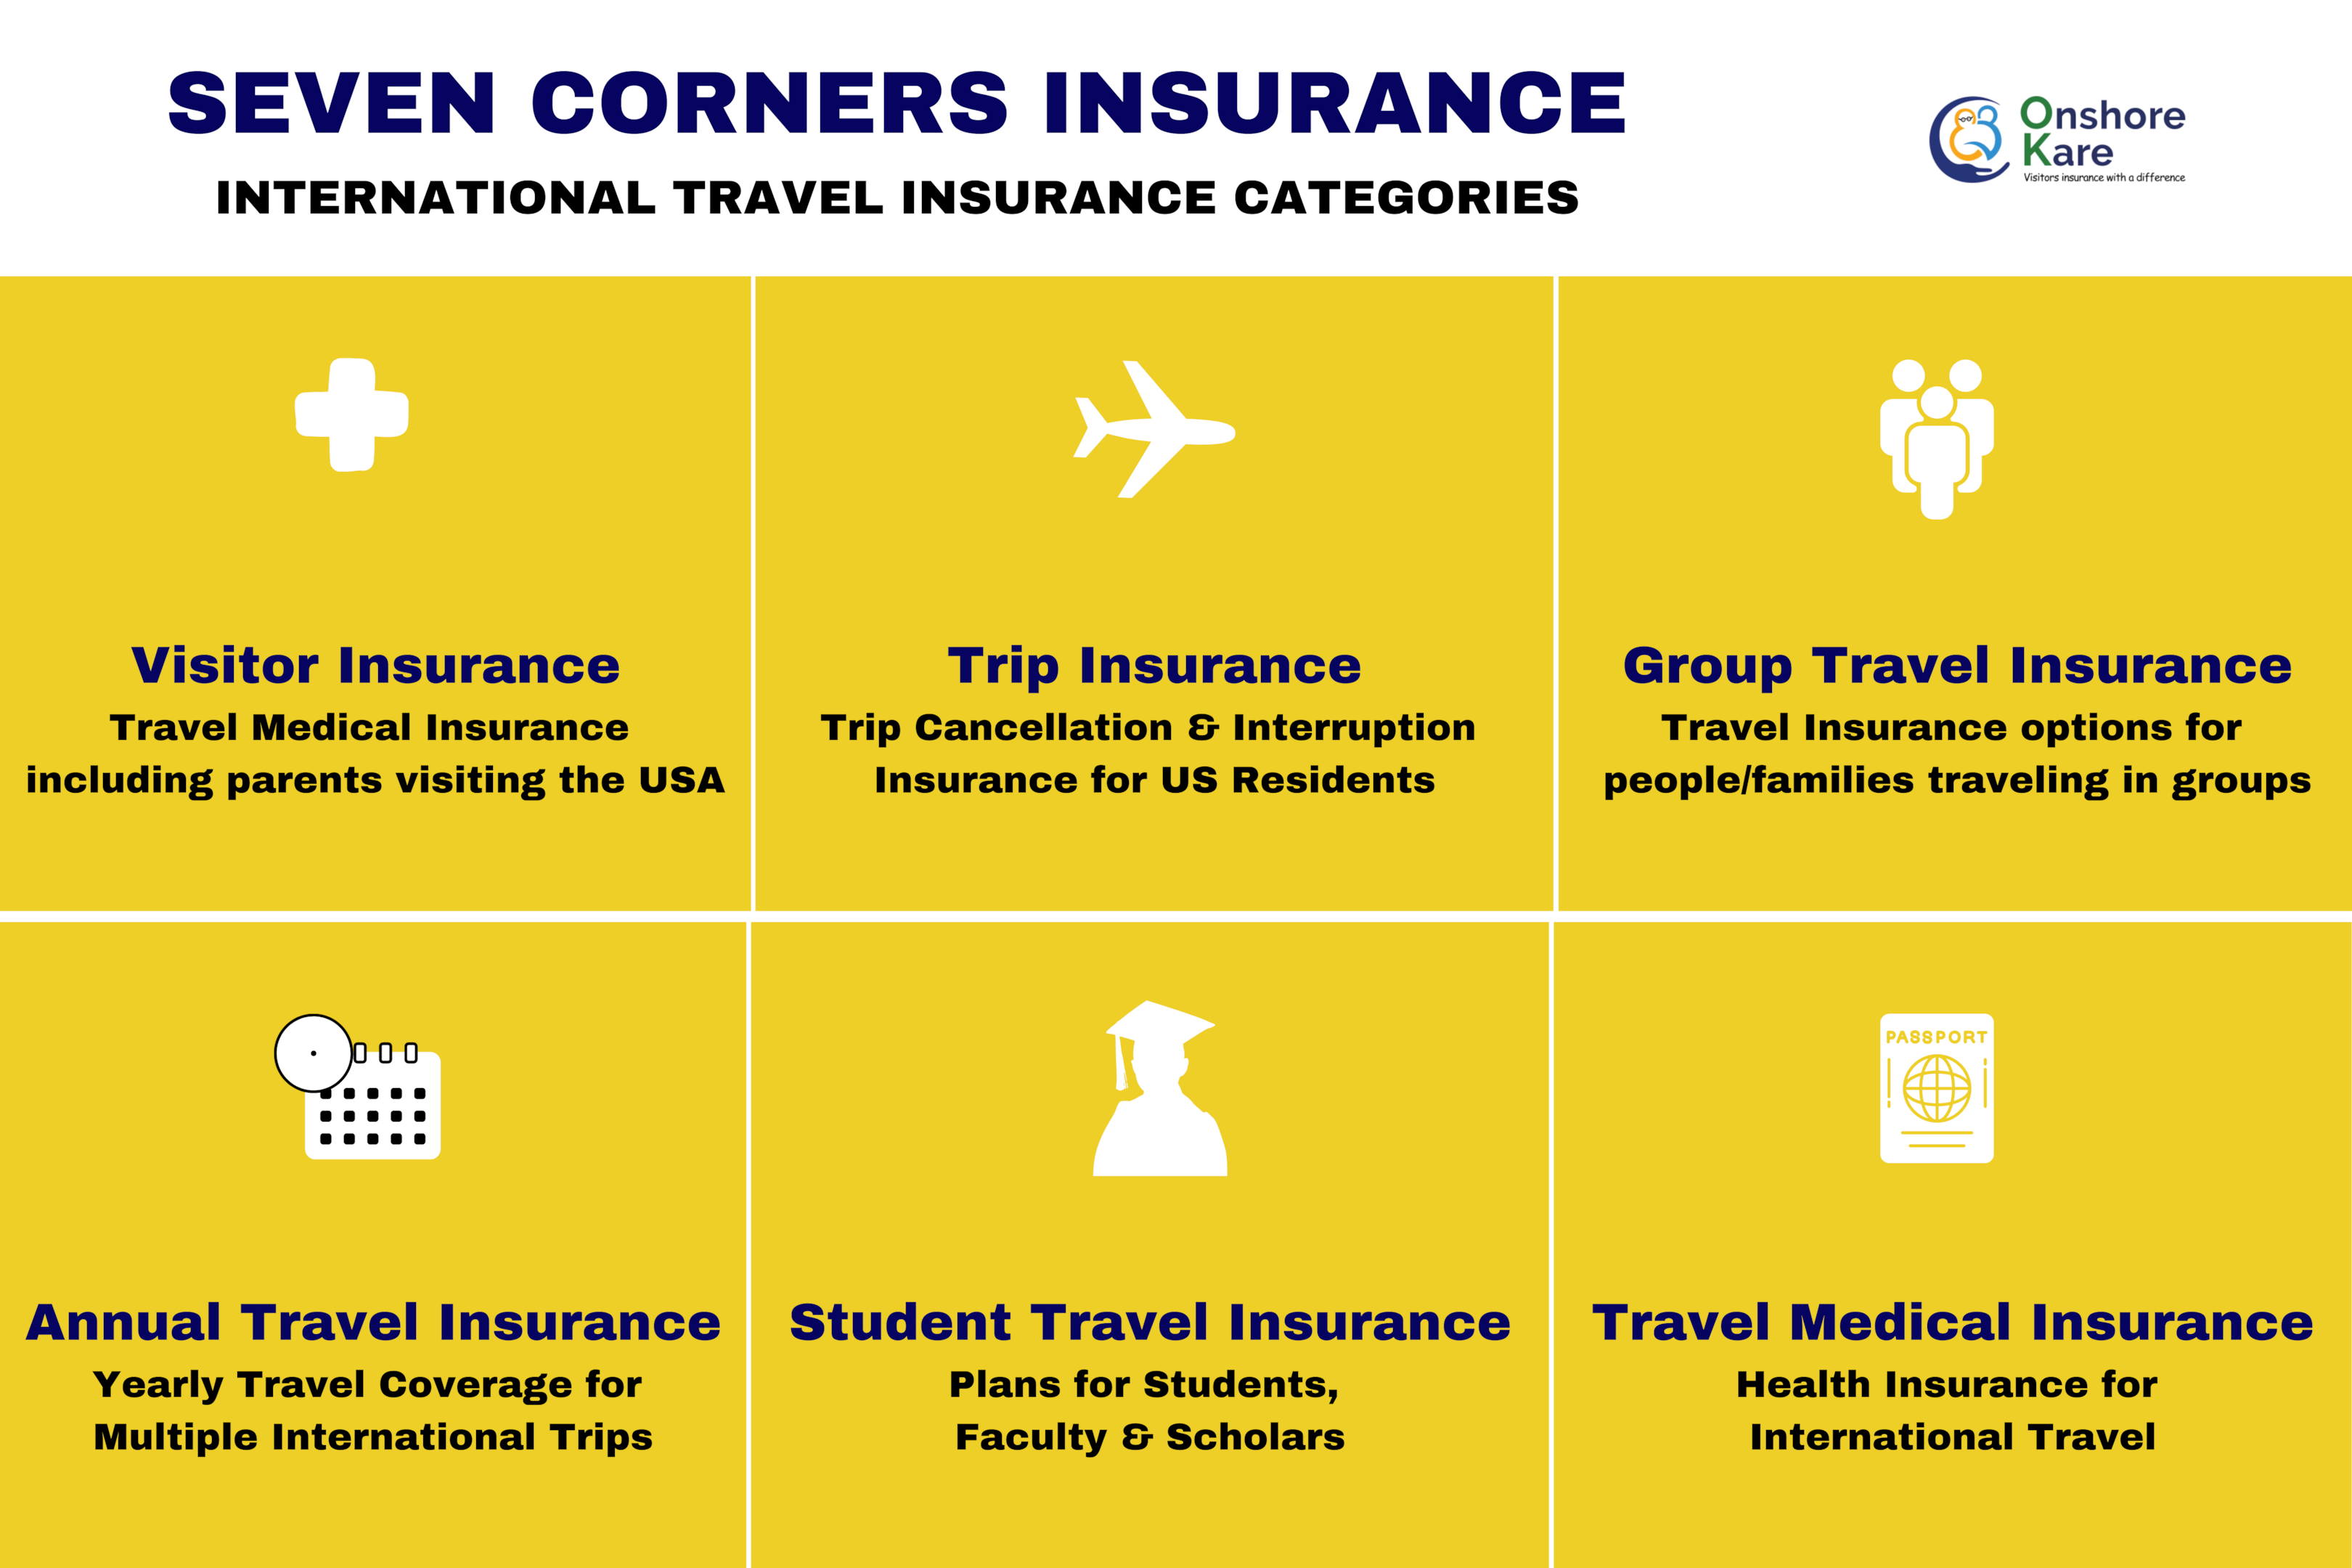 Seven Corners Travel Insurance Categories